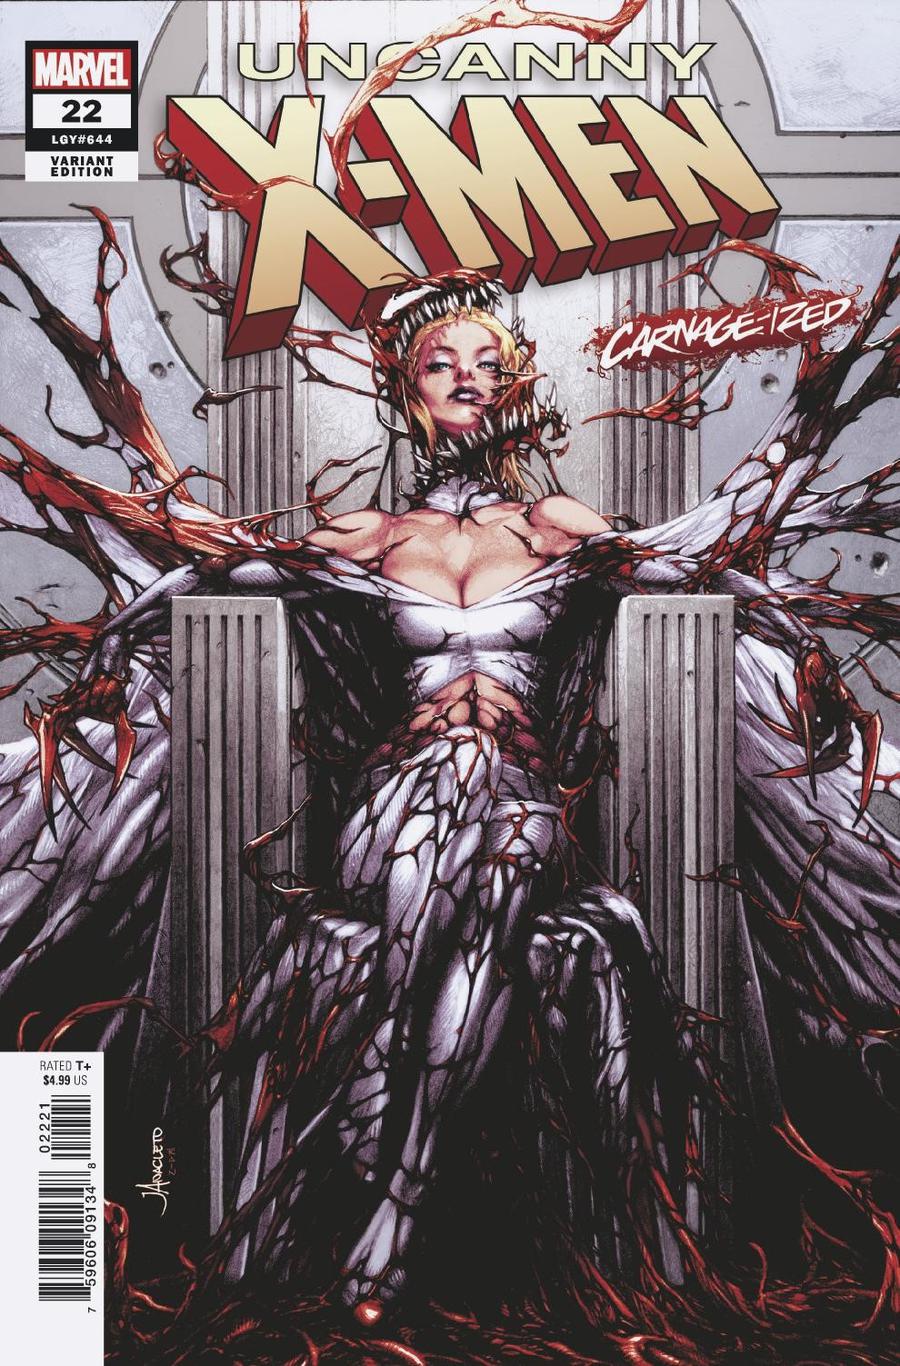 Uncanny X-Men Vol 5 #22 Cover B Variant Jay Anacleto Carnage-Ized Cover